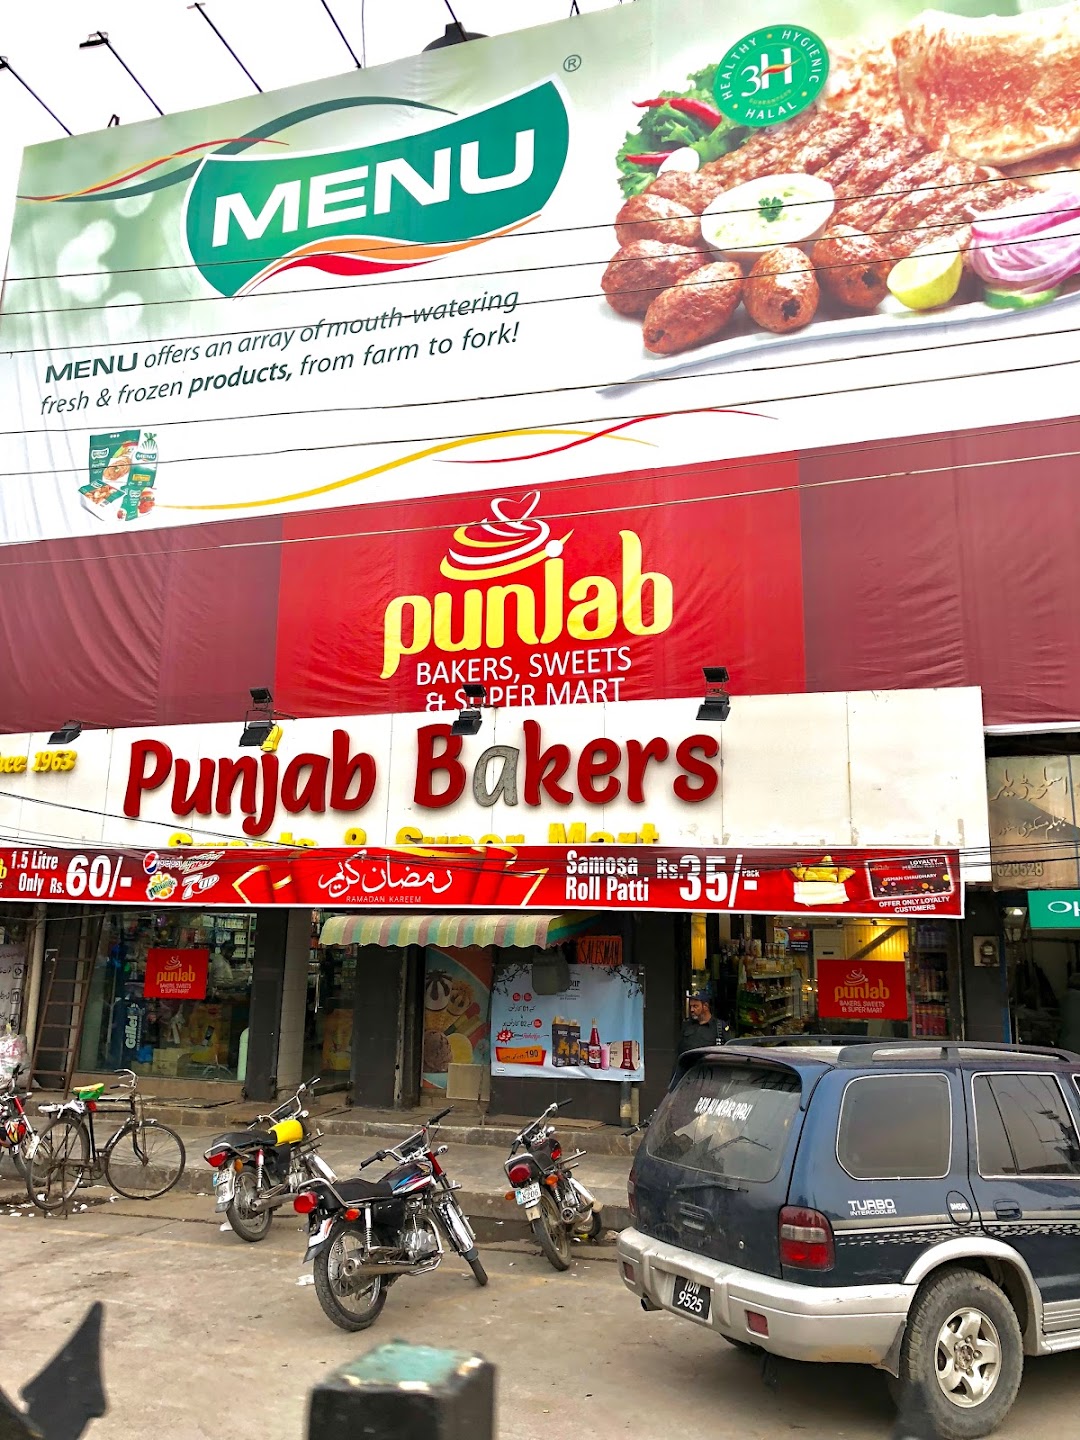 Punjab Bakers, Sweets & Supermart